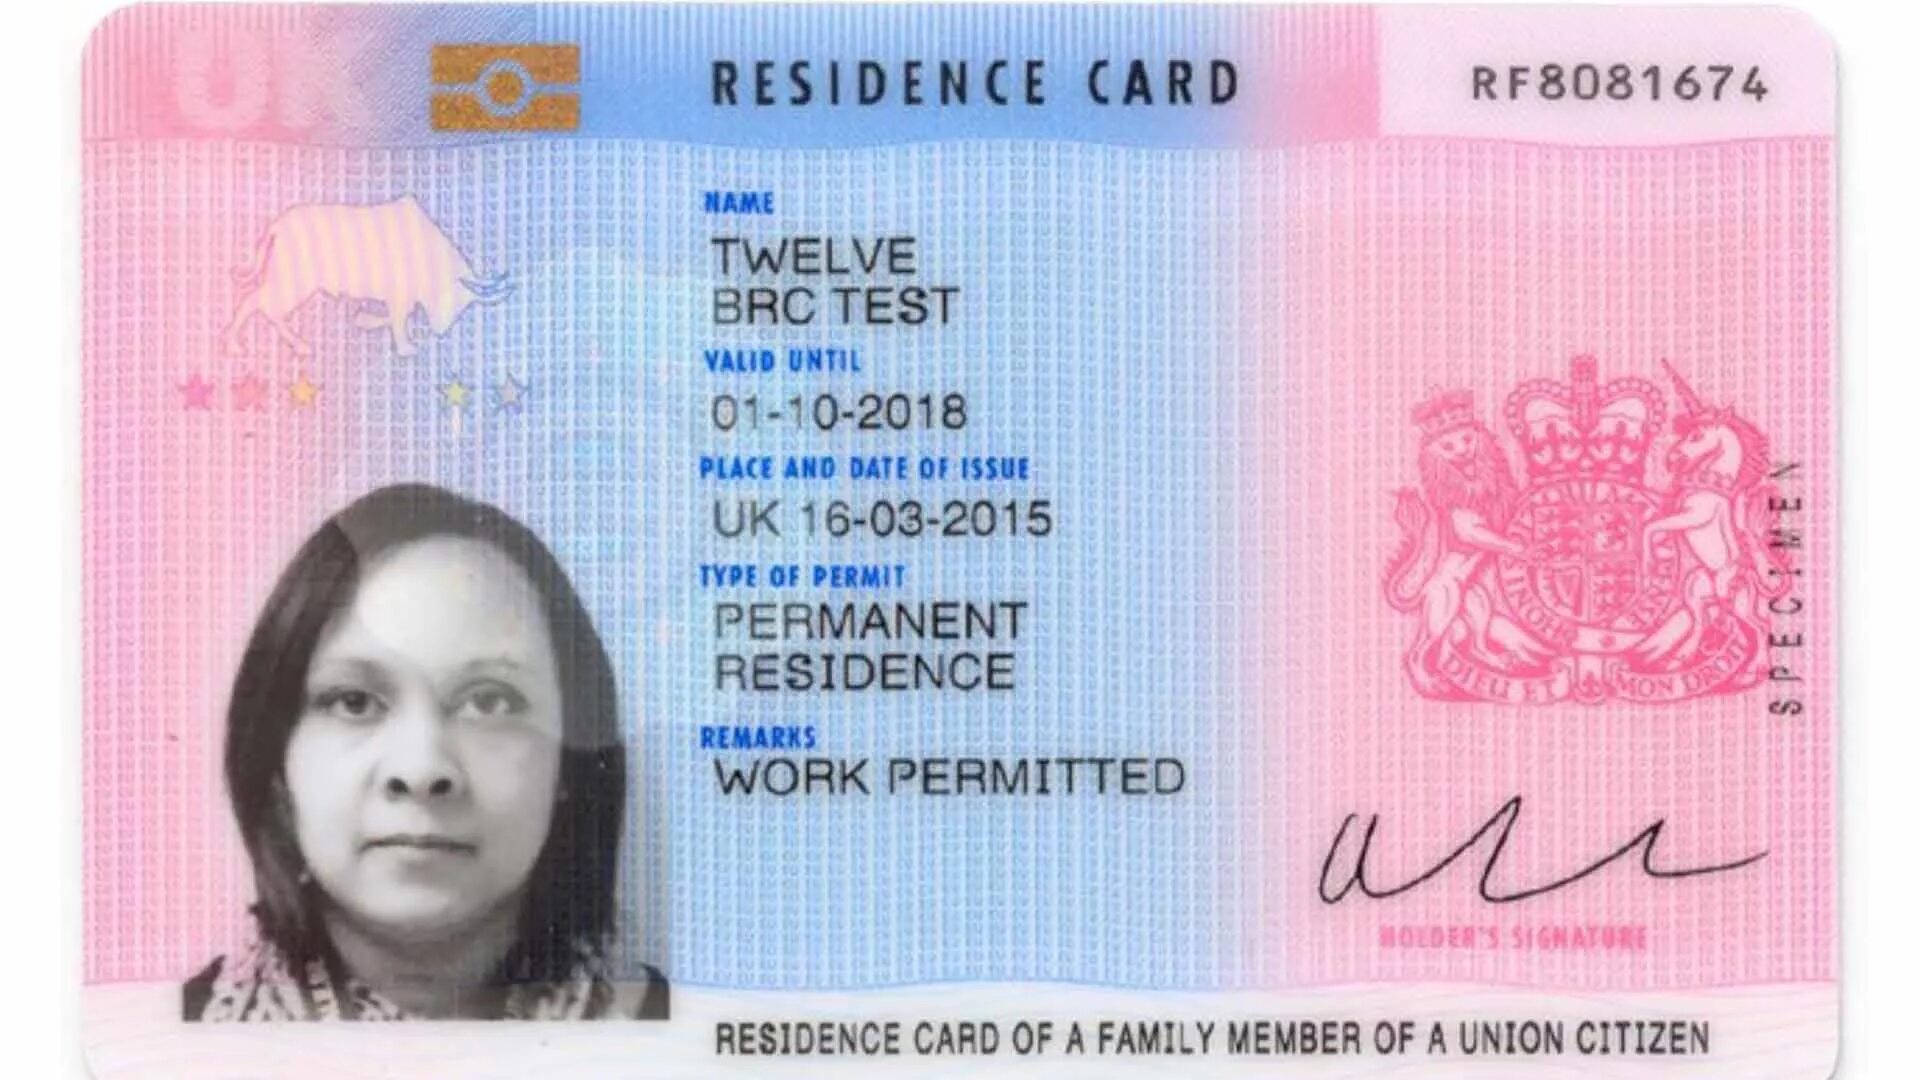 Вид на жительство Англия. ID Card Великобритании. ВНЖ Британии. Вит на жительство Великобритании фото. Paired id